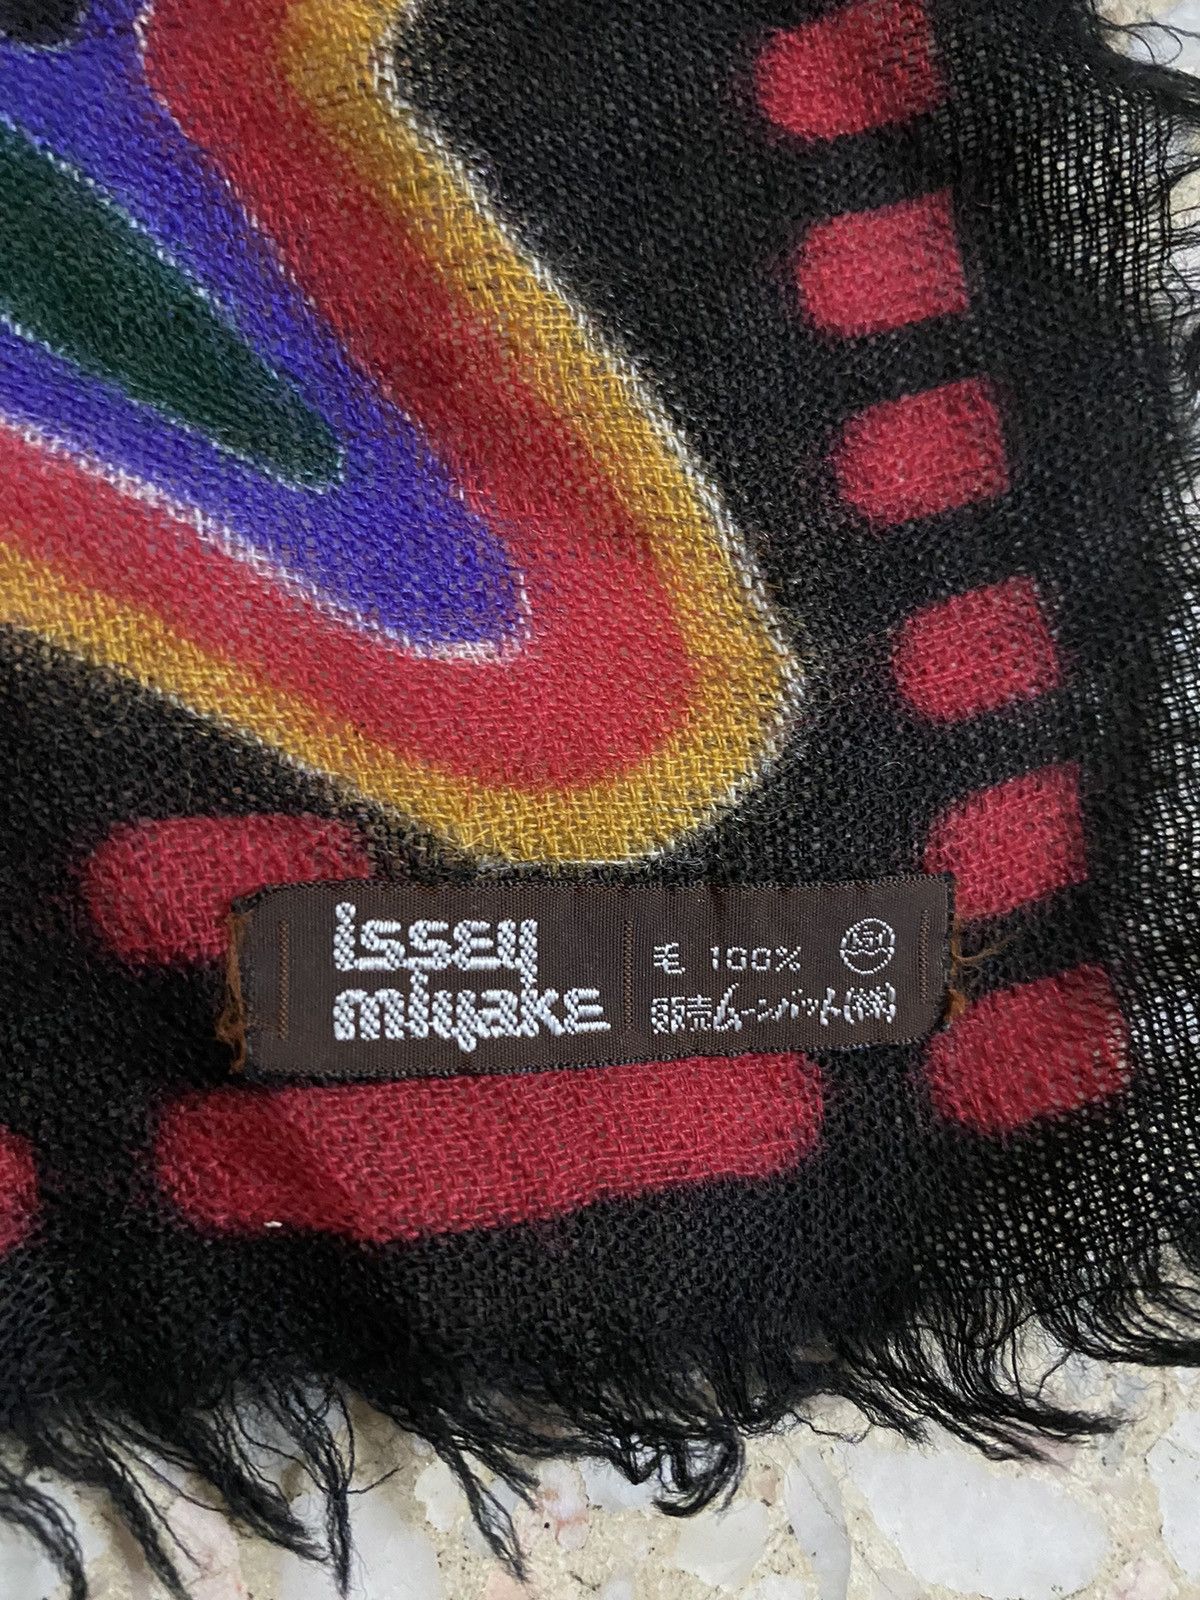 Vintage 80’s Issey Miyake Textile Art Square Scarf - 8